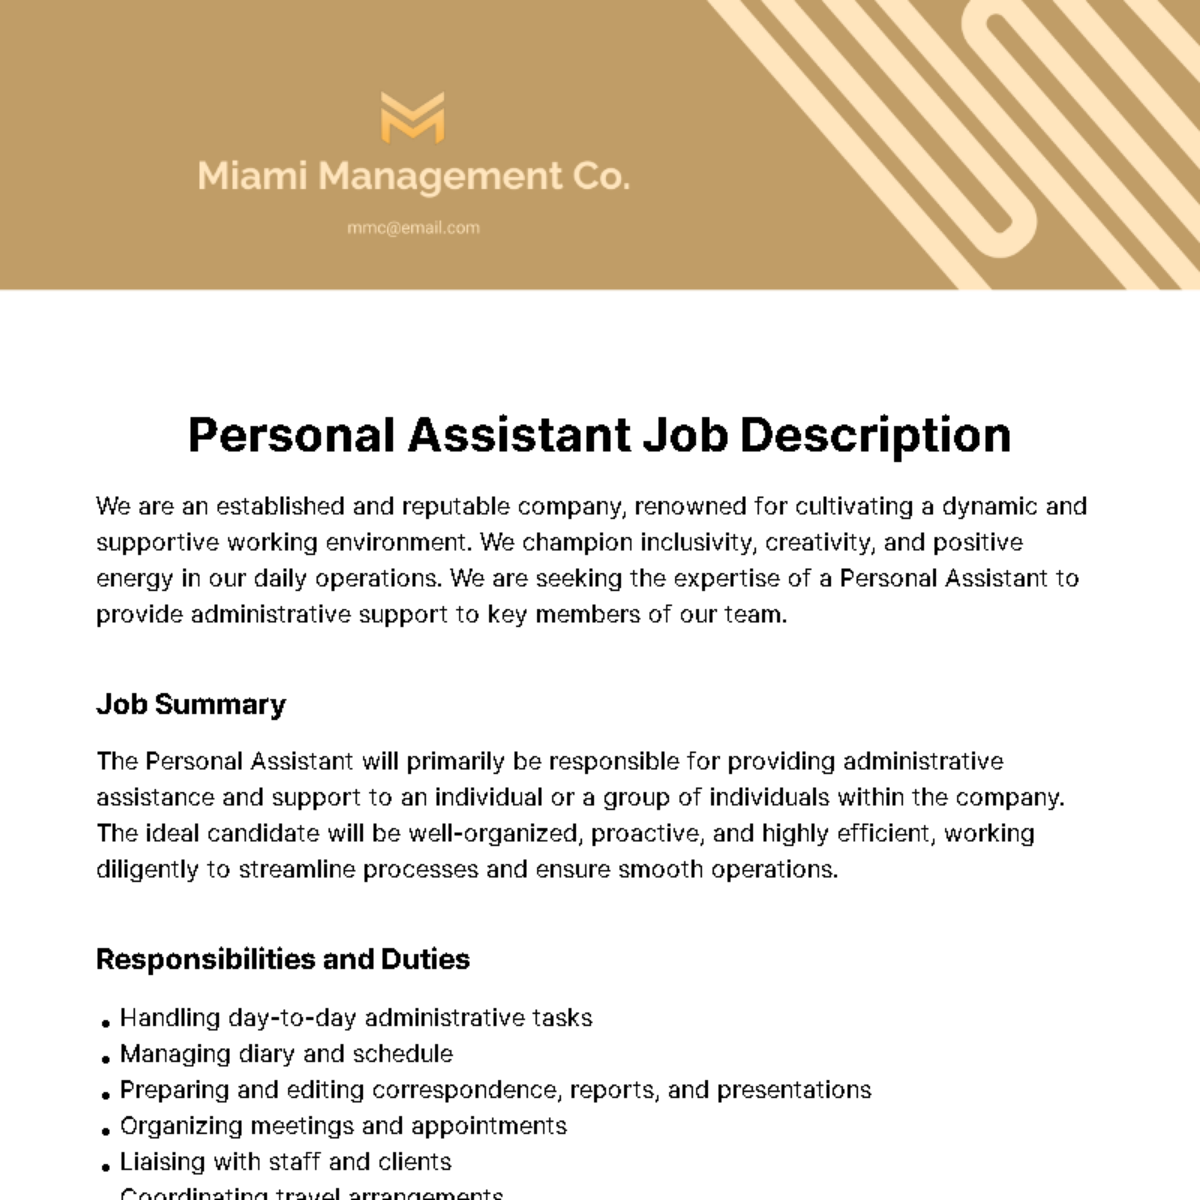 Personal Assistant Job Description Template